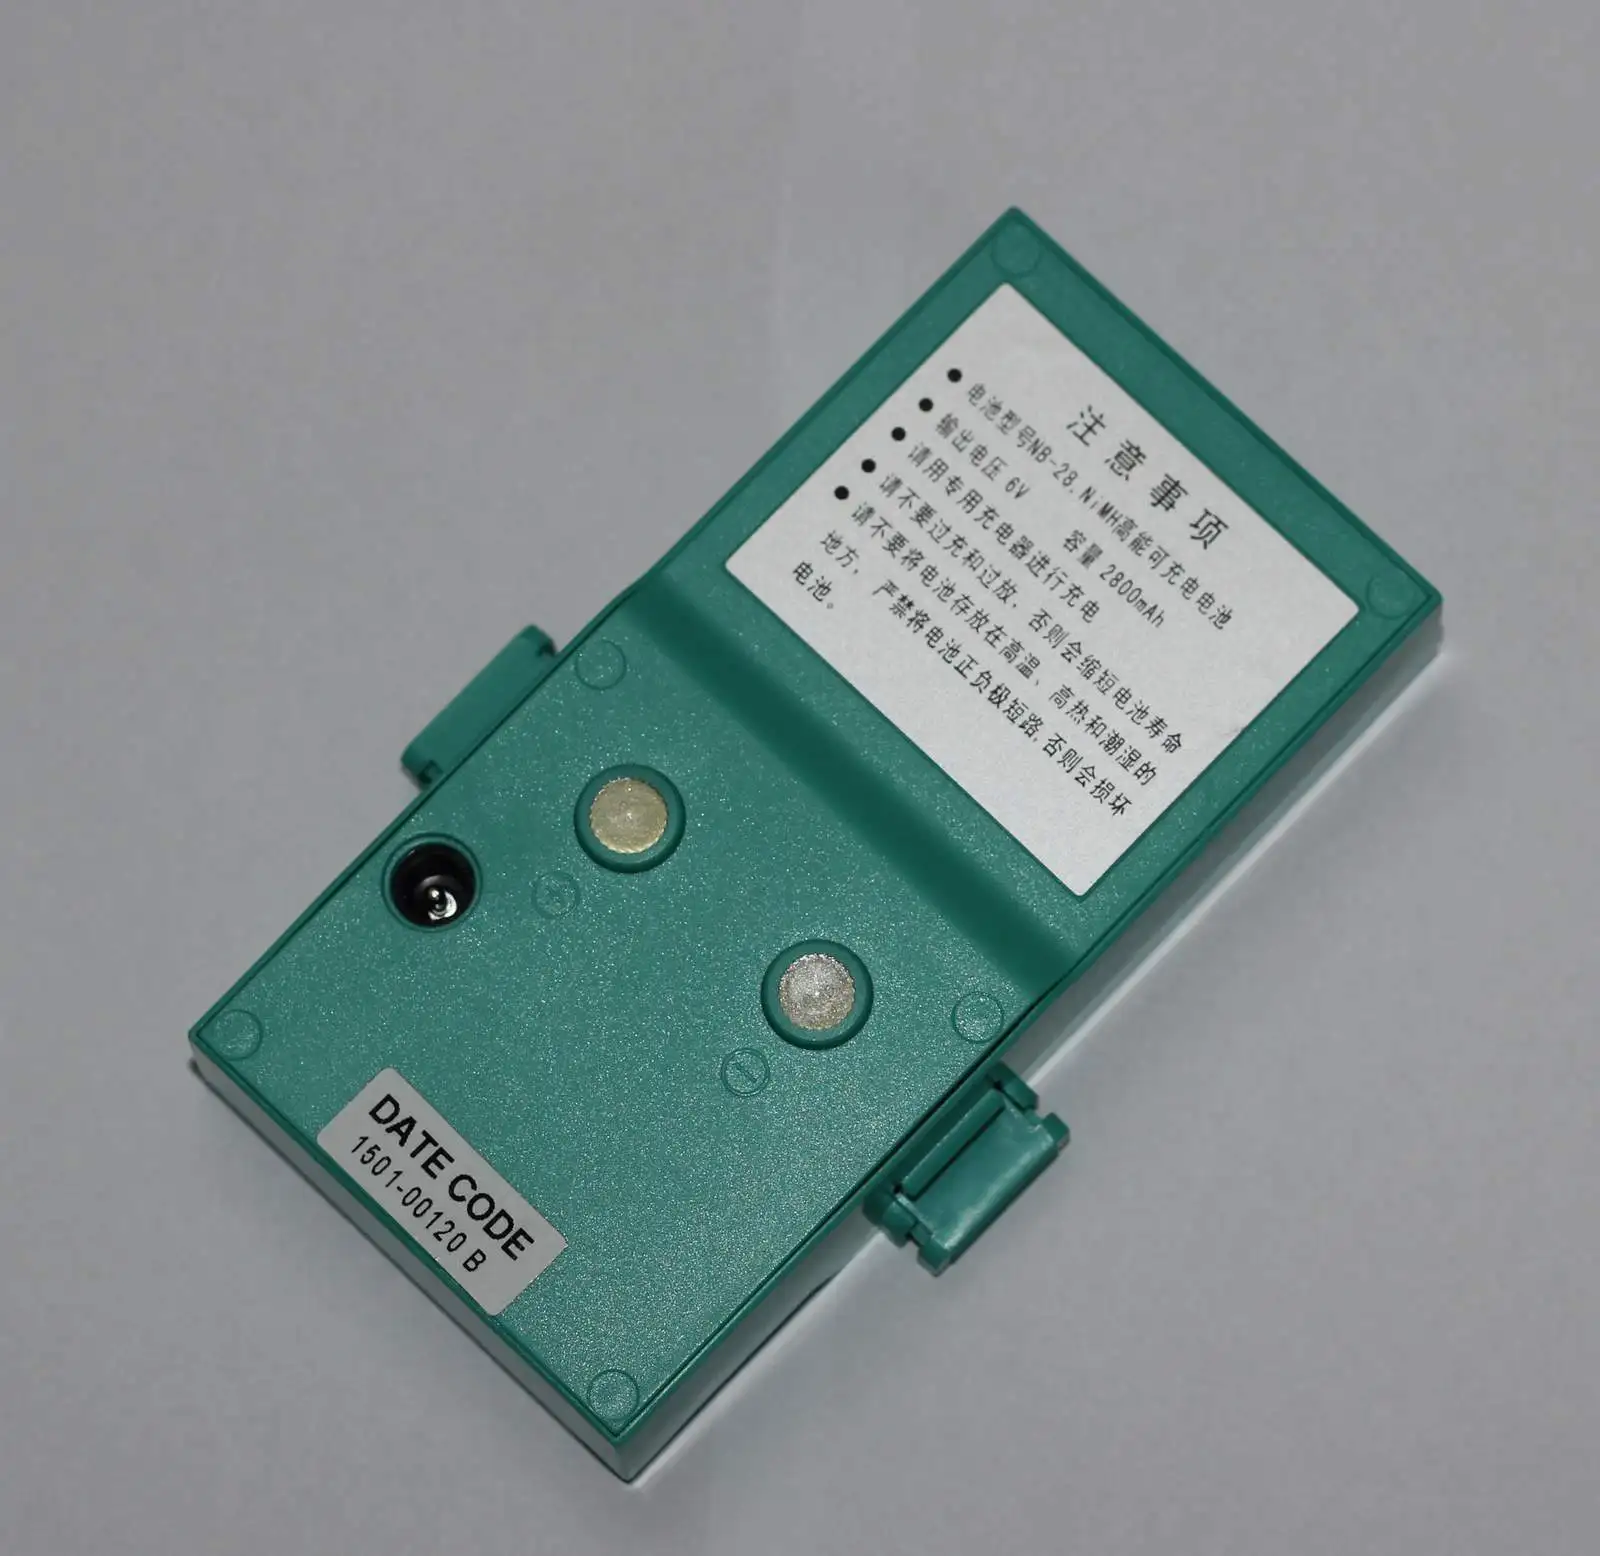 Аккумулятор RUIDE NB-28 для RTS 820/822/822R3/860/R5 серии электронный автоматический тахеометр